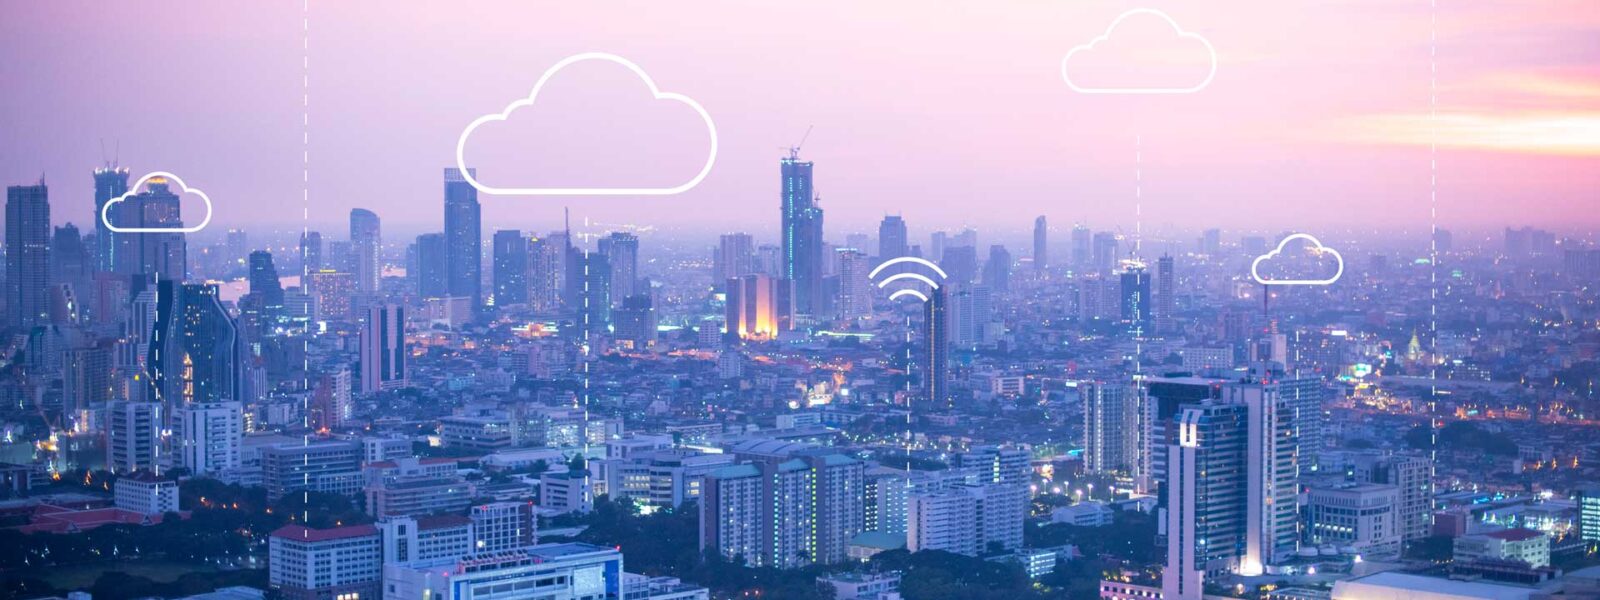 cloud-computing-banner-background-smart-city